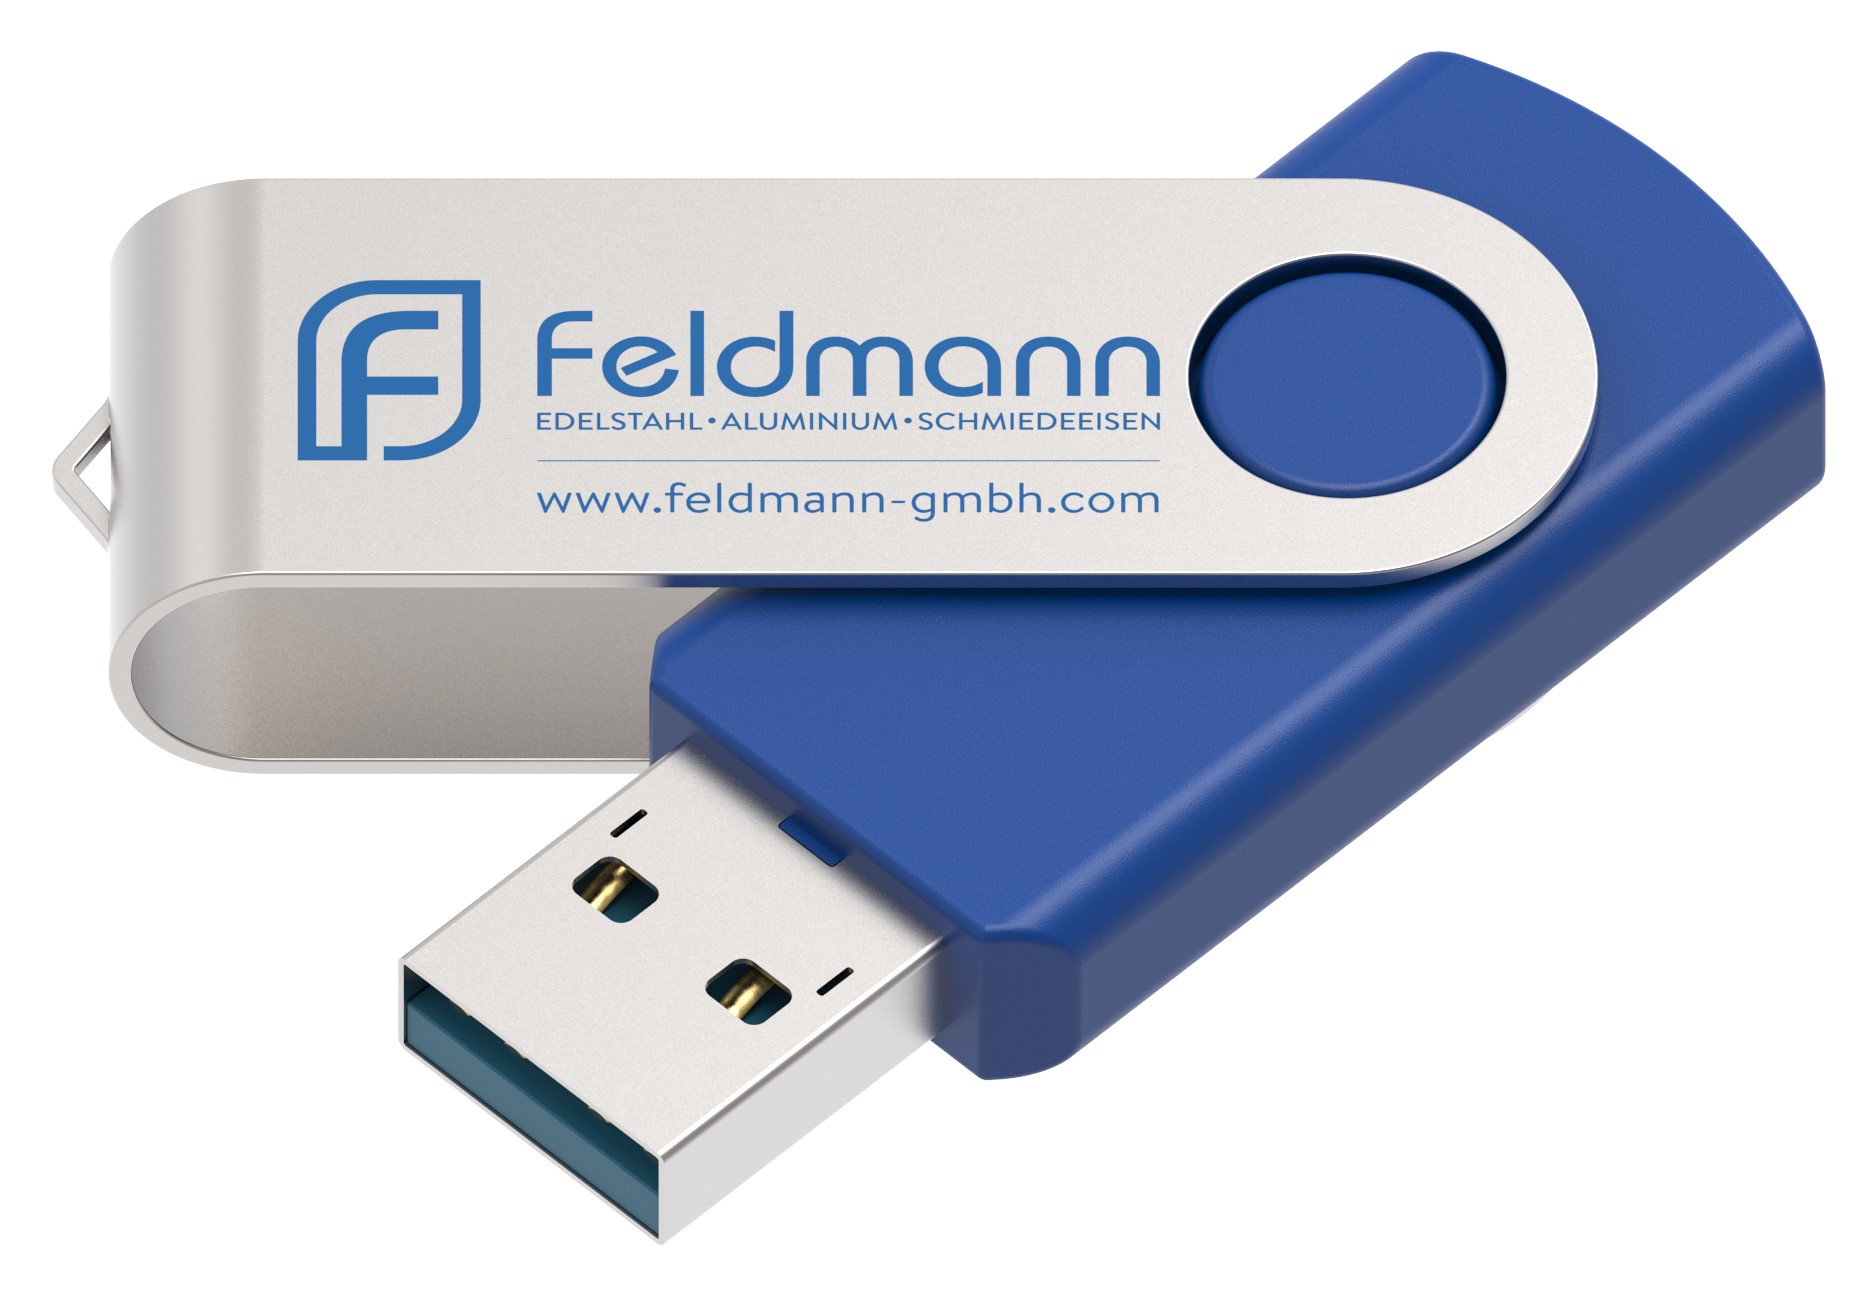 Feldmann USB-Stick